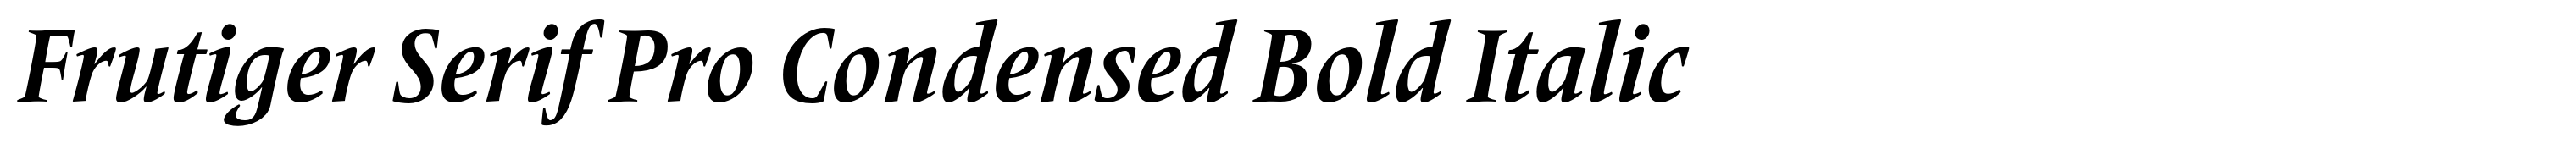 Frutiger Serif Pro Condensed Bold Italic